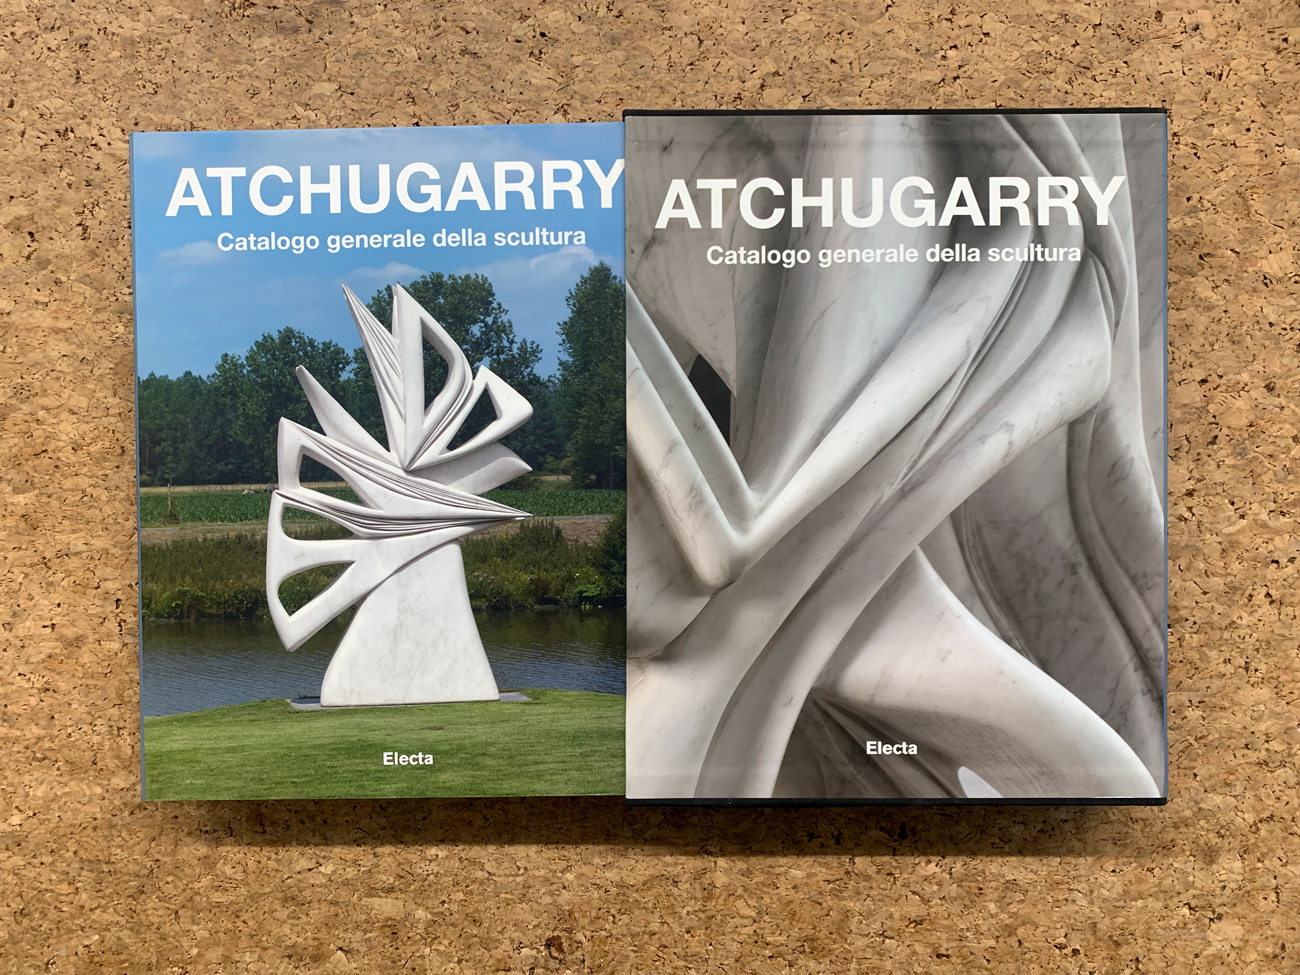 PABLO ATCHUGARRY - Atchugarry. Catalogo generale della scultura. Volume primo 1971-2002, 2012